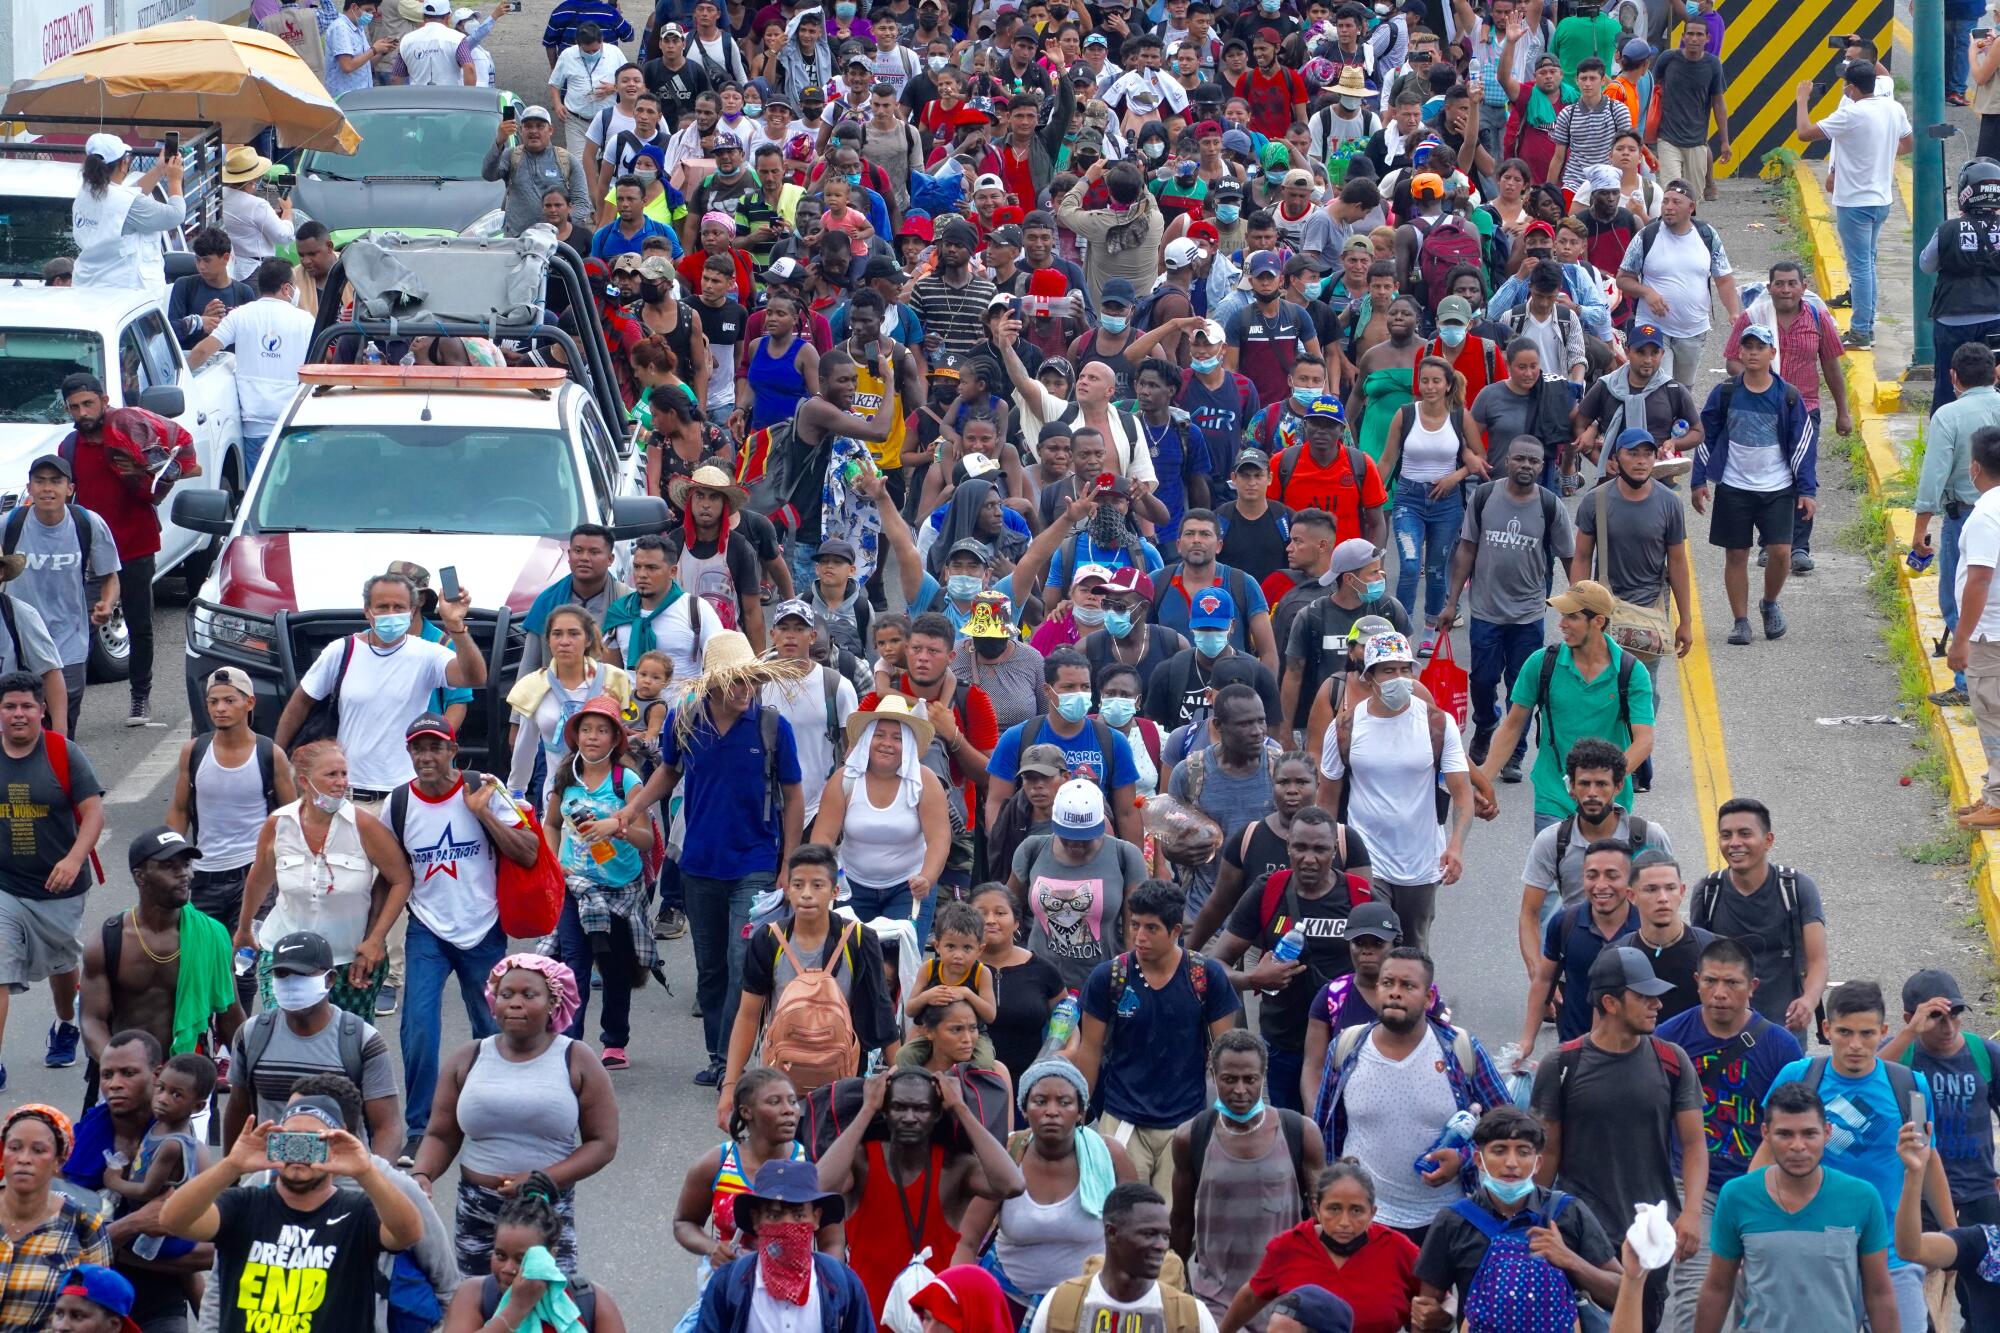 Crowds of people dressed in short sleeves or tank tops, many wearing backpacks, walk on a road alongside vehicles. 